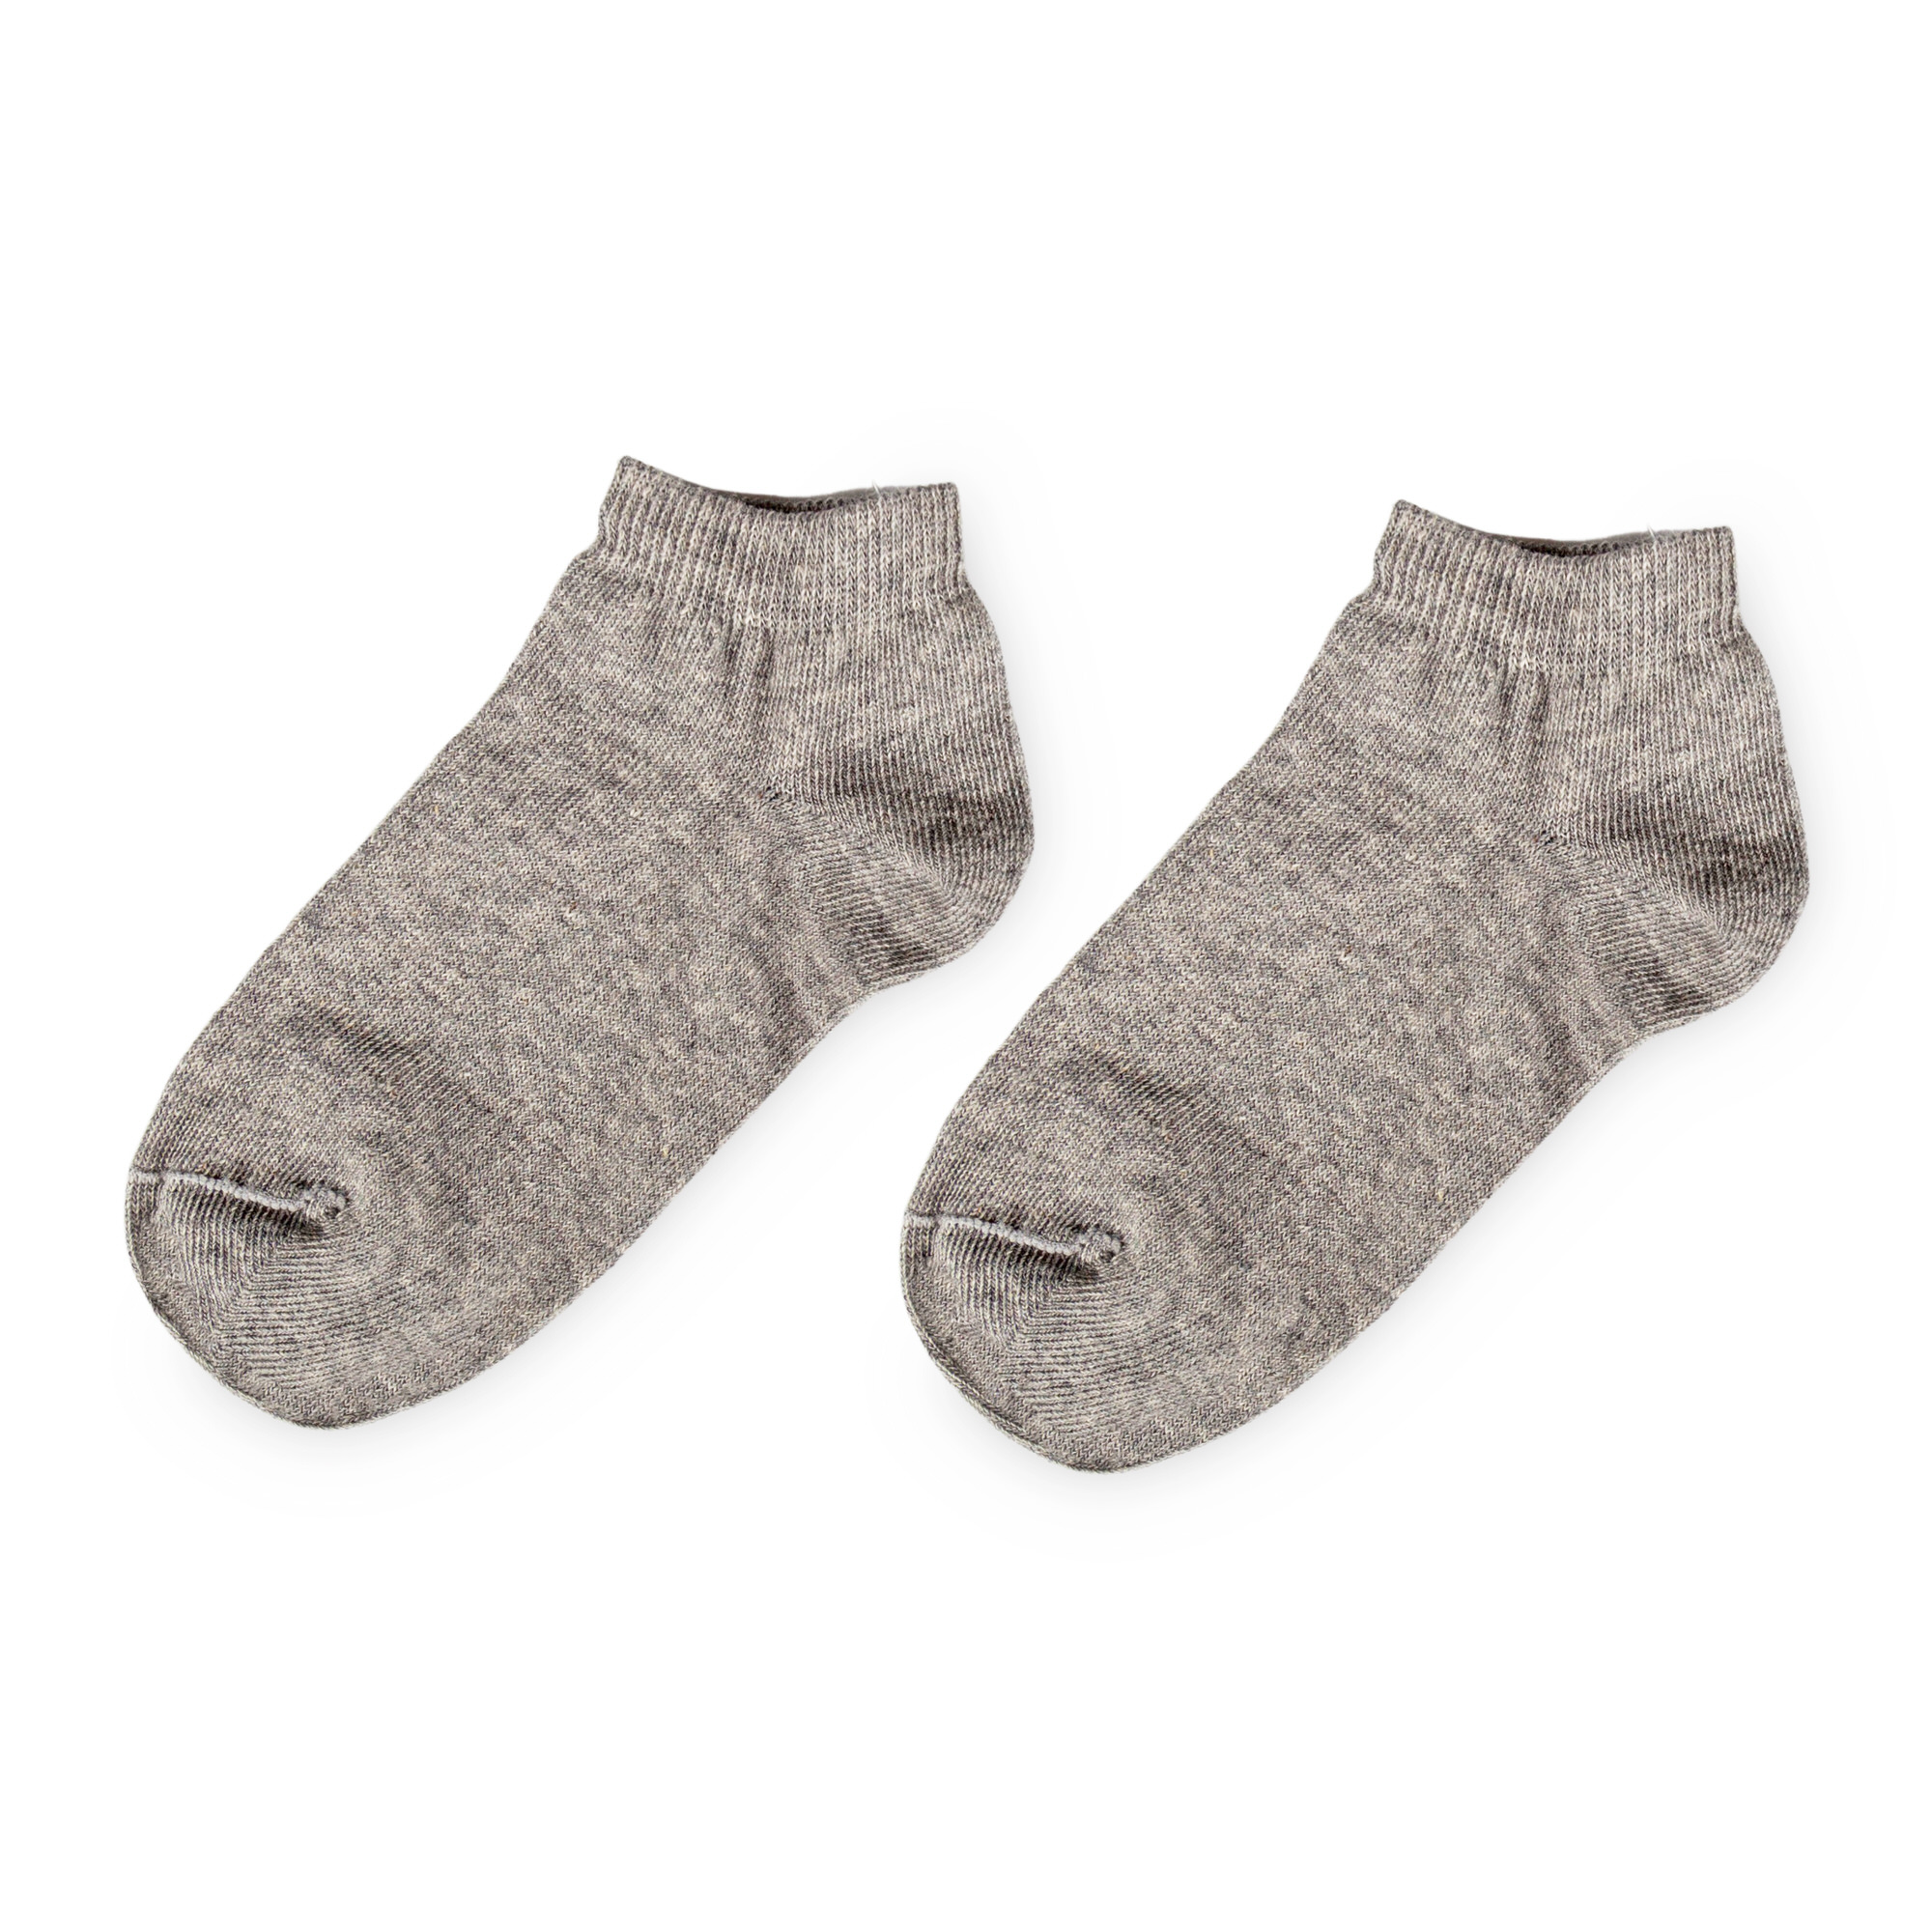 Children's trainer socks, grey marl